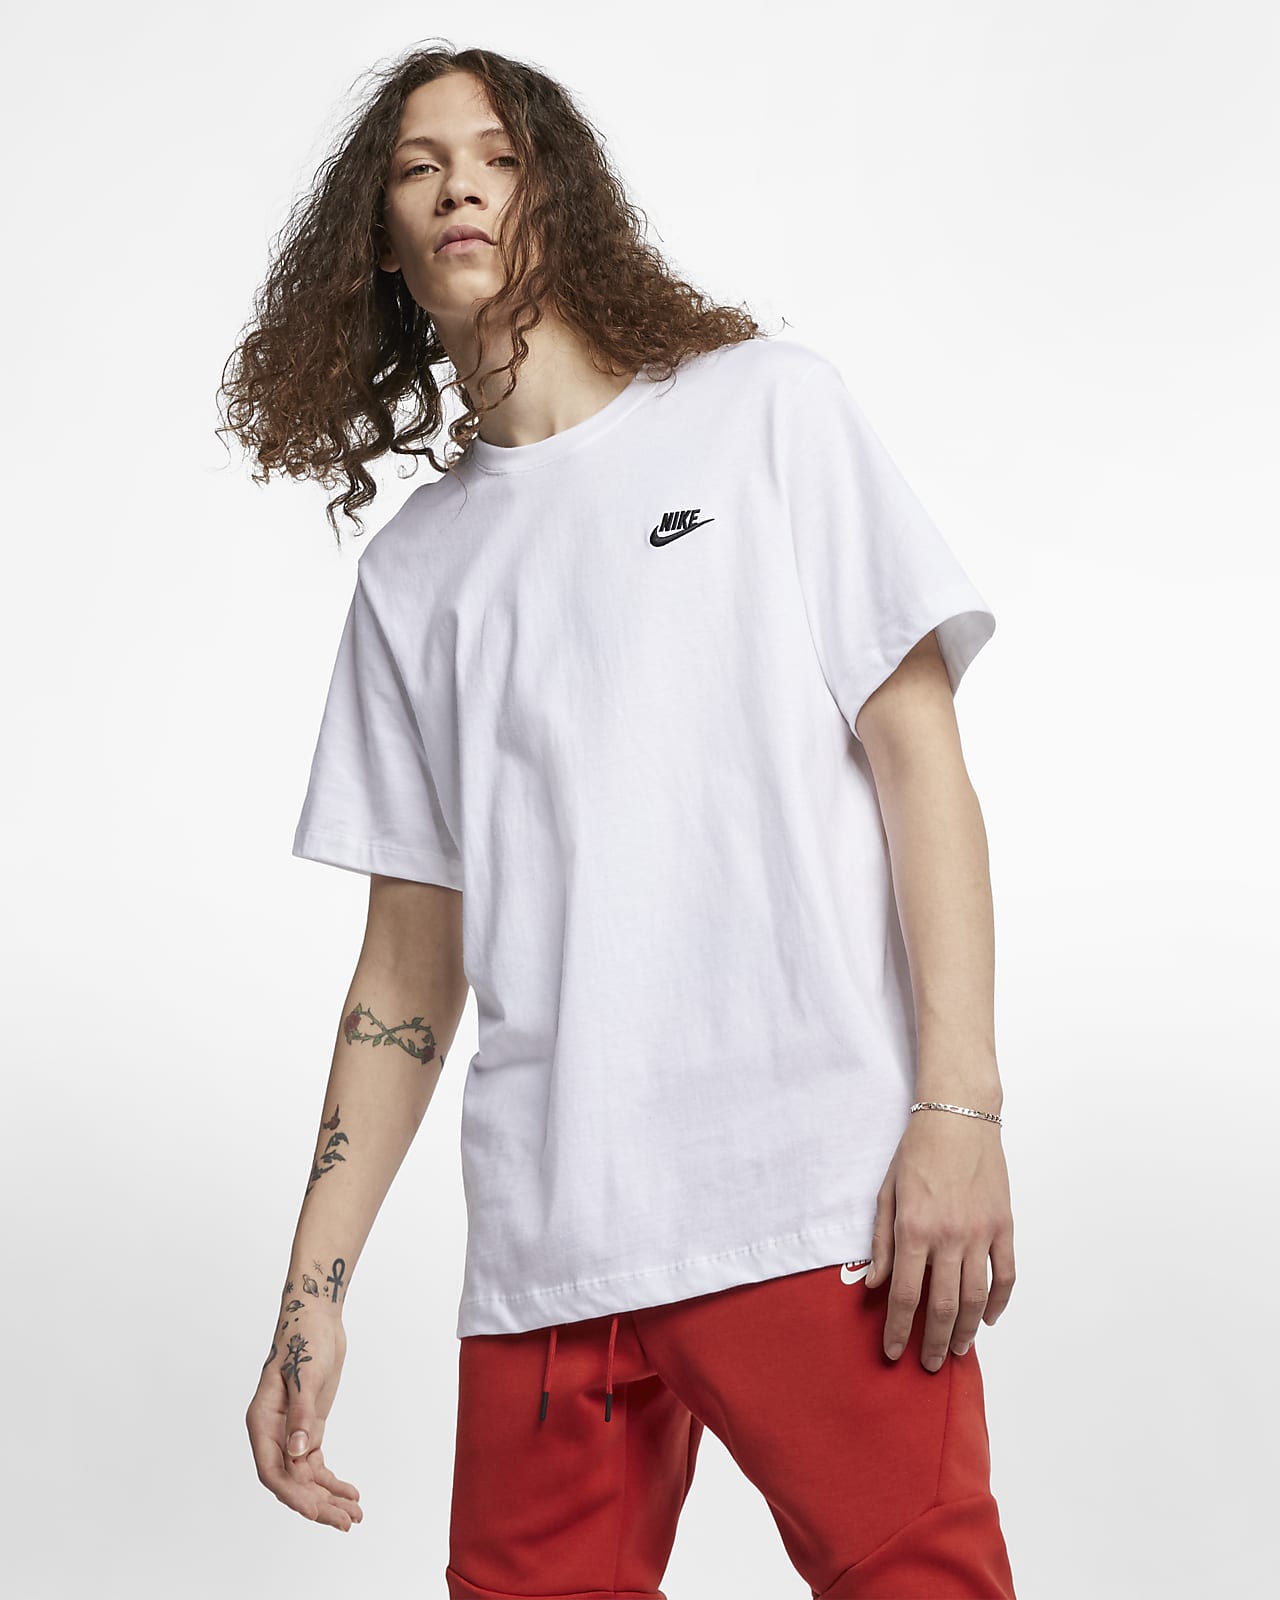 T-shirt Nike Sportswear pour homme